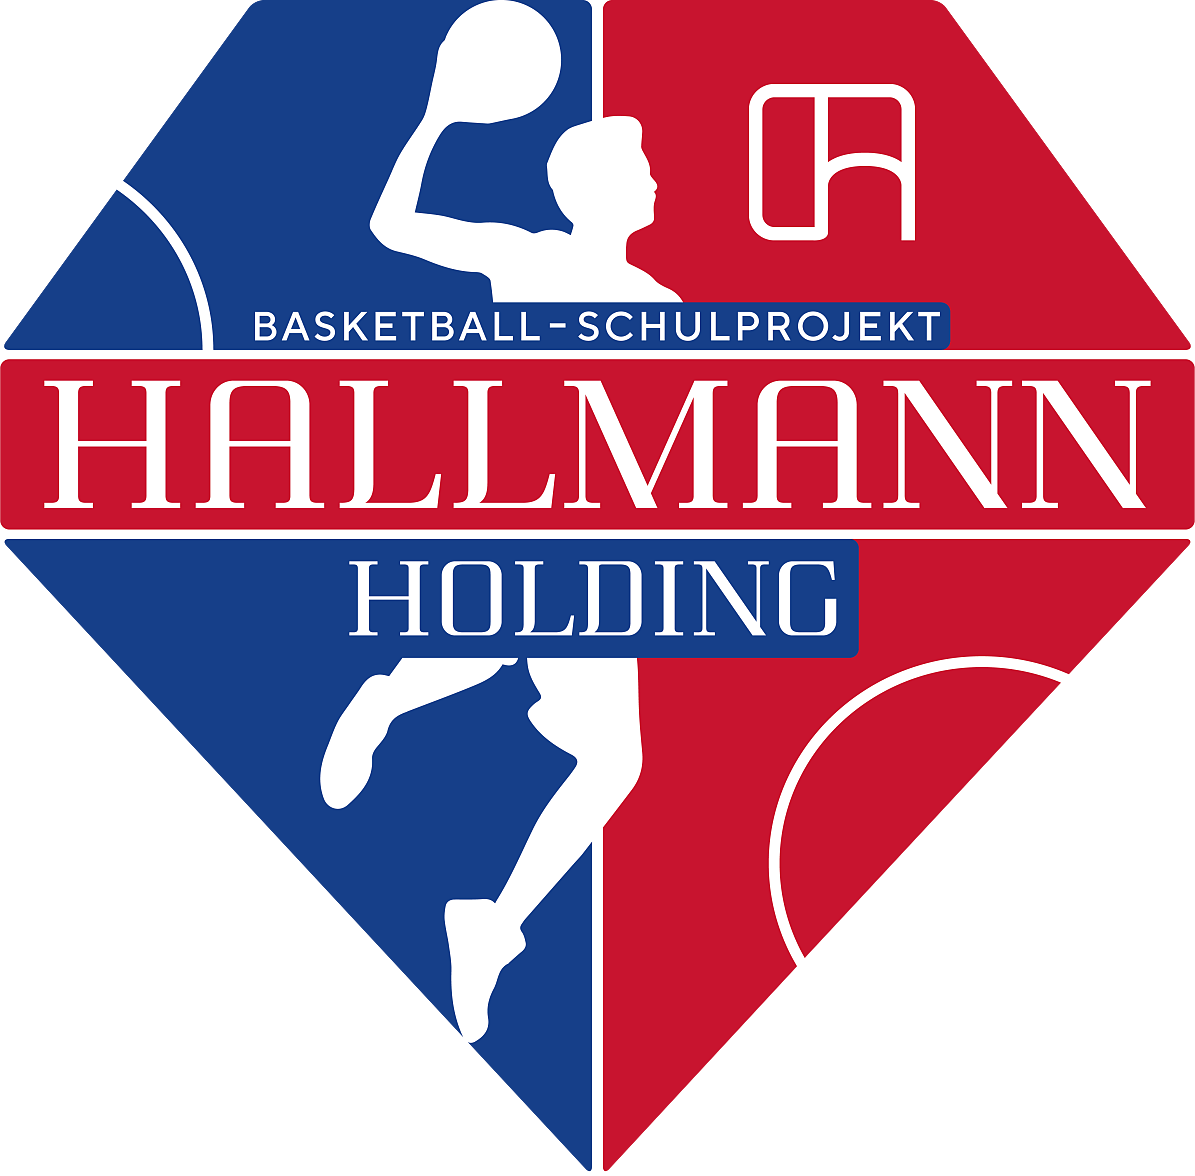 Basketball Schulprojekt Hallmann Holding Logo